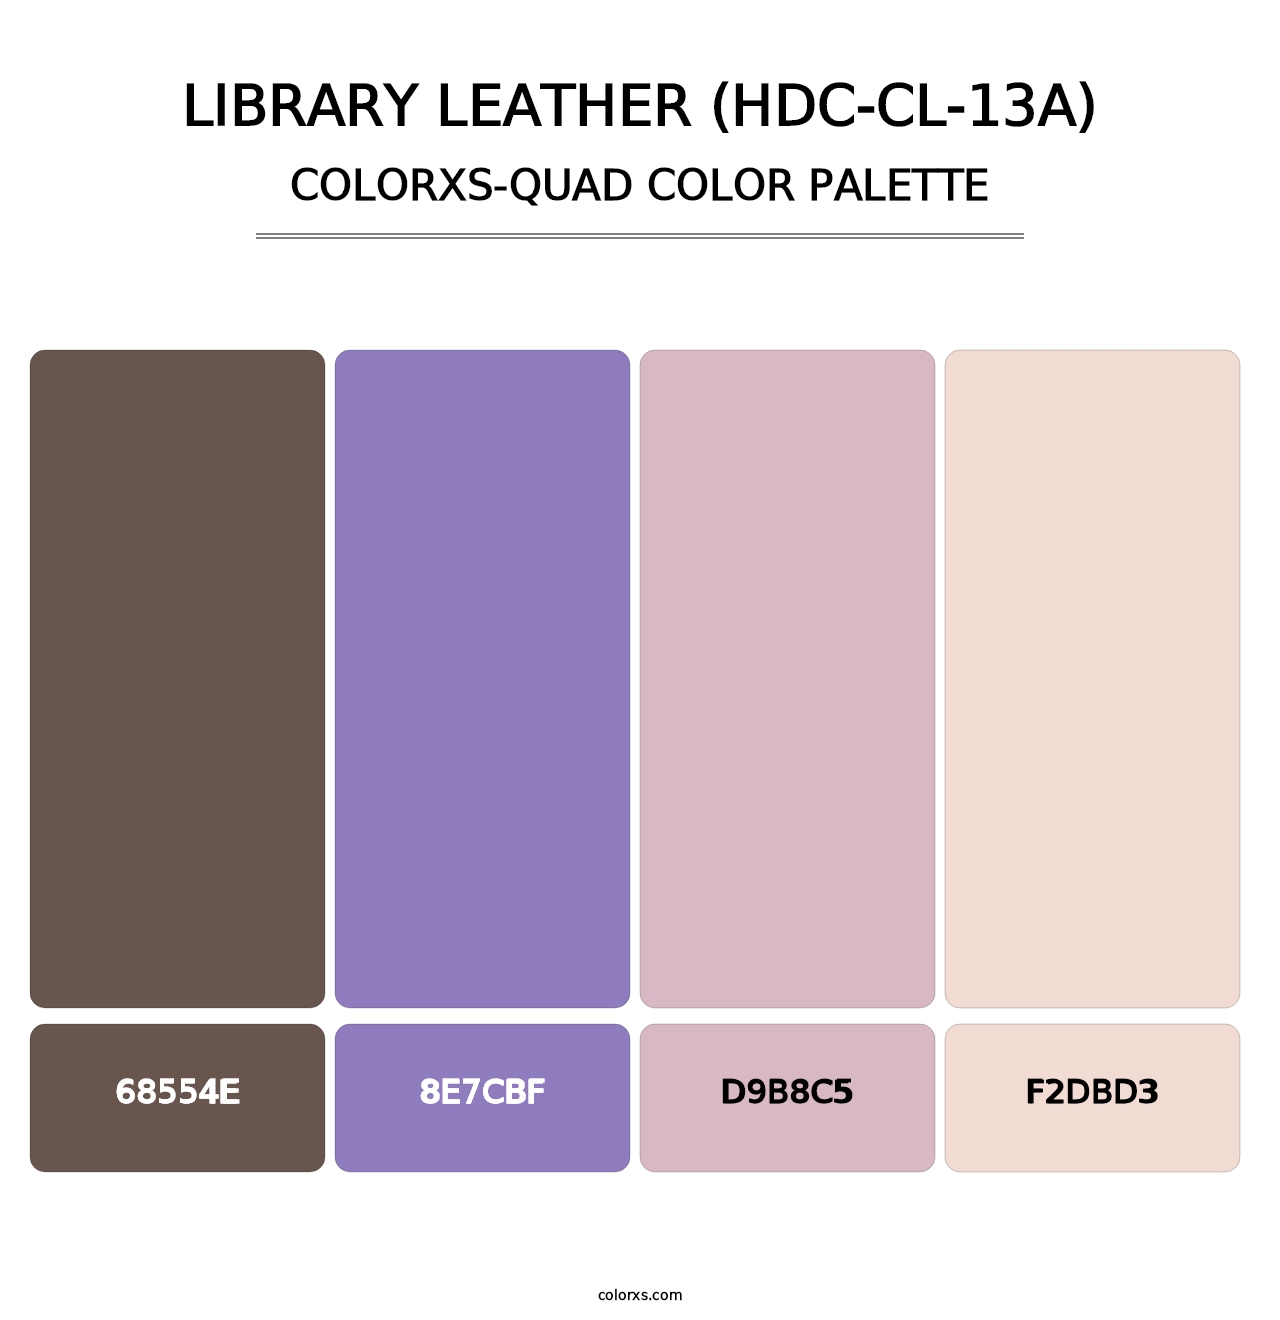 Library Leather (HDC-CL-13A) - Colorxs Quad Palette